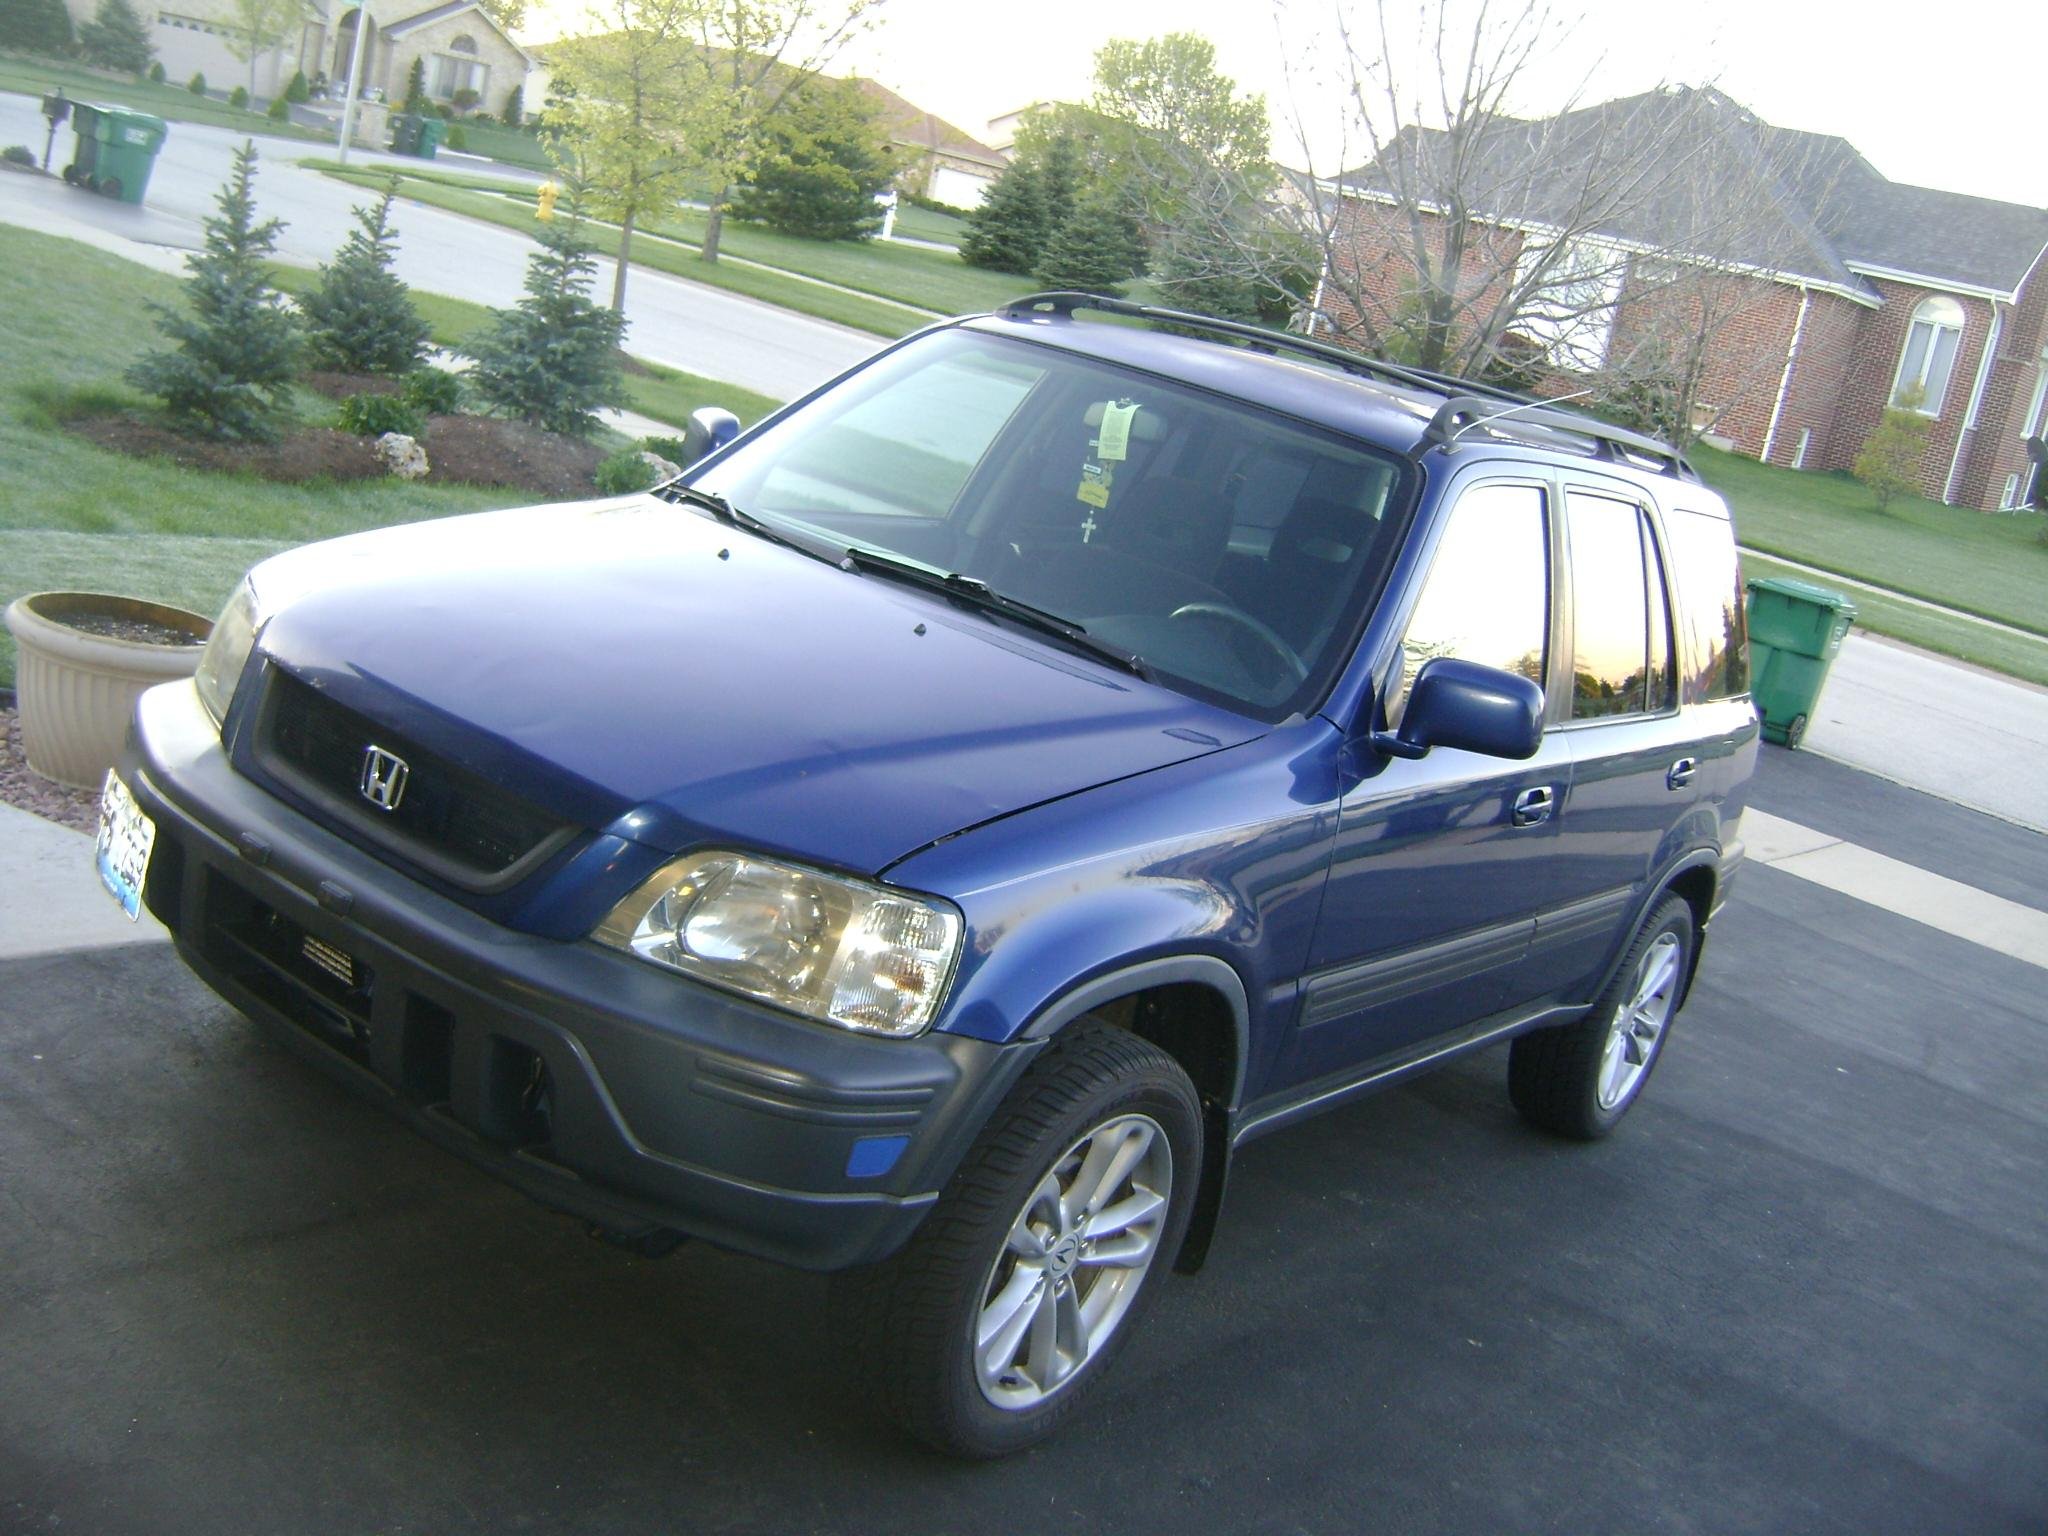 Црв 2000 года. Honda CR-V 1999. Honda CRV 1998. Honda CR-V 1 1999. Honda CRV 2001.